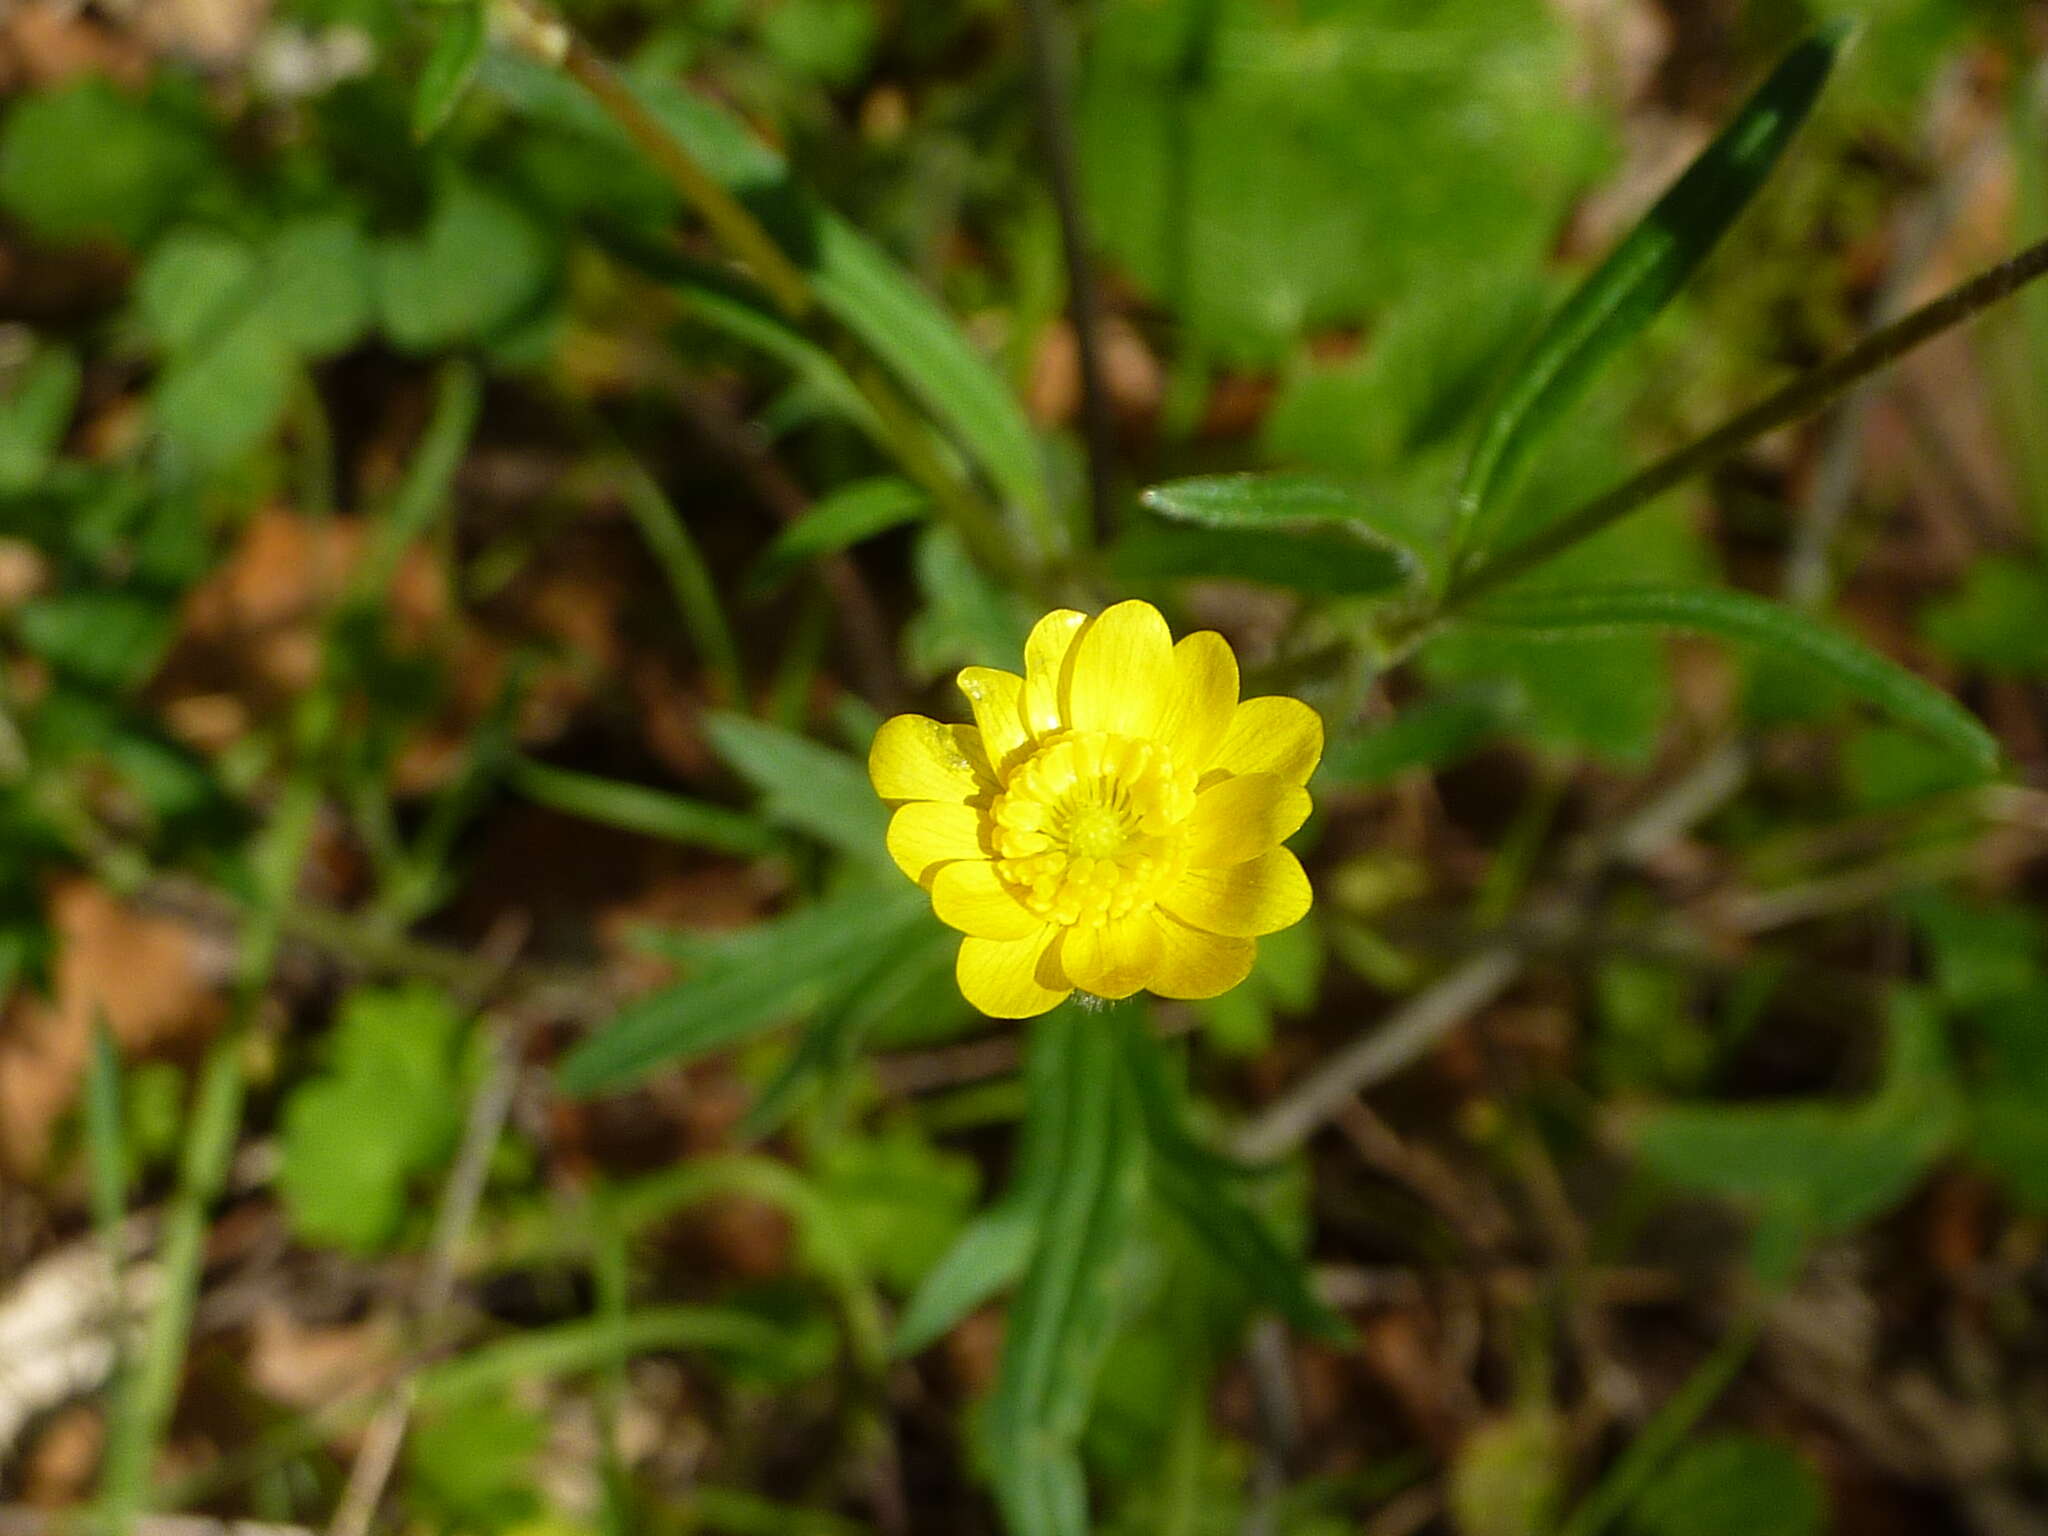 Image de Ranunculus californicus Benth.